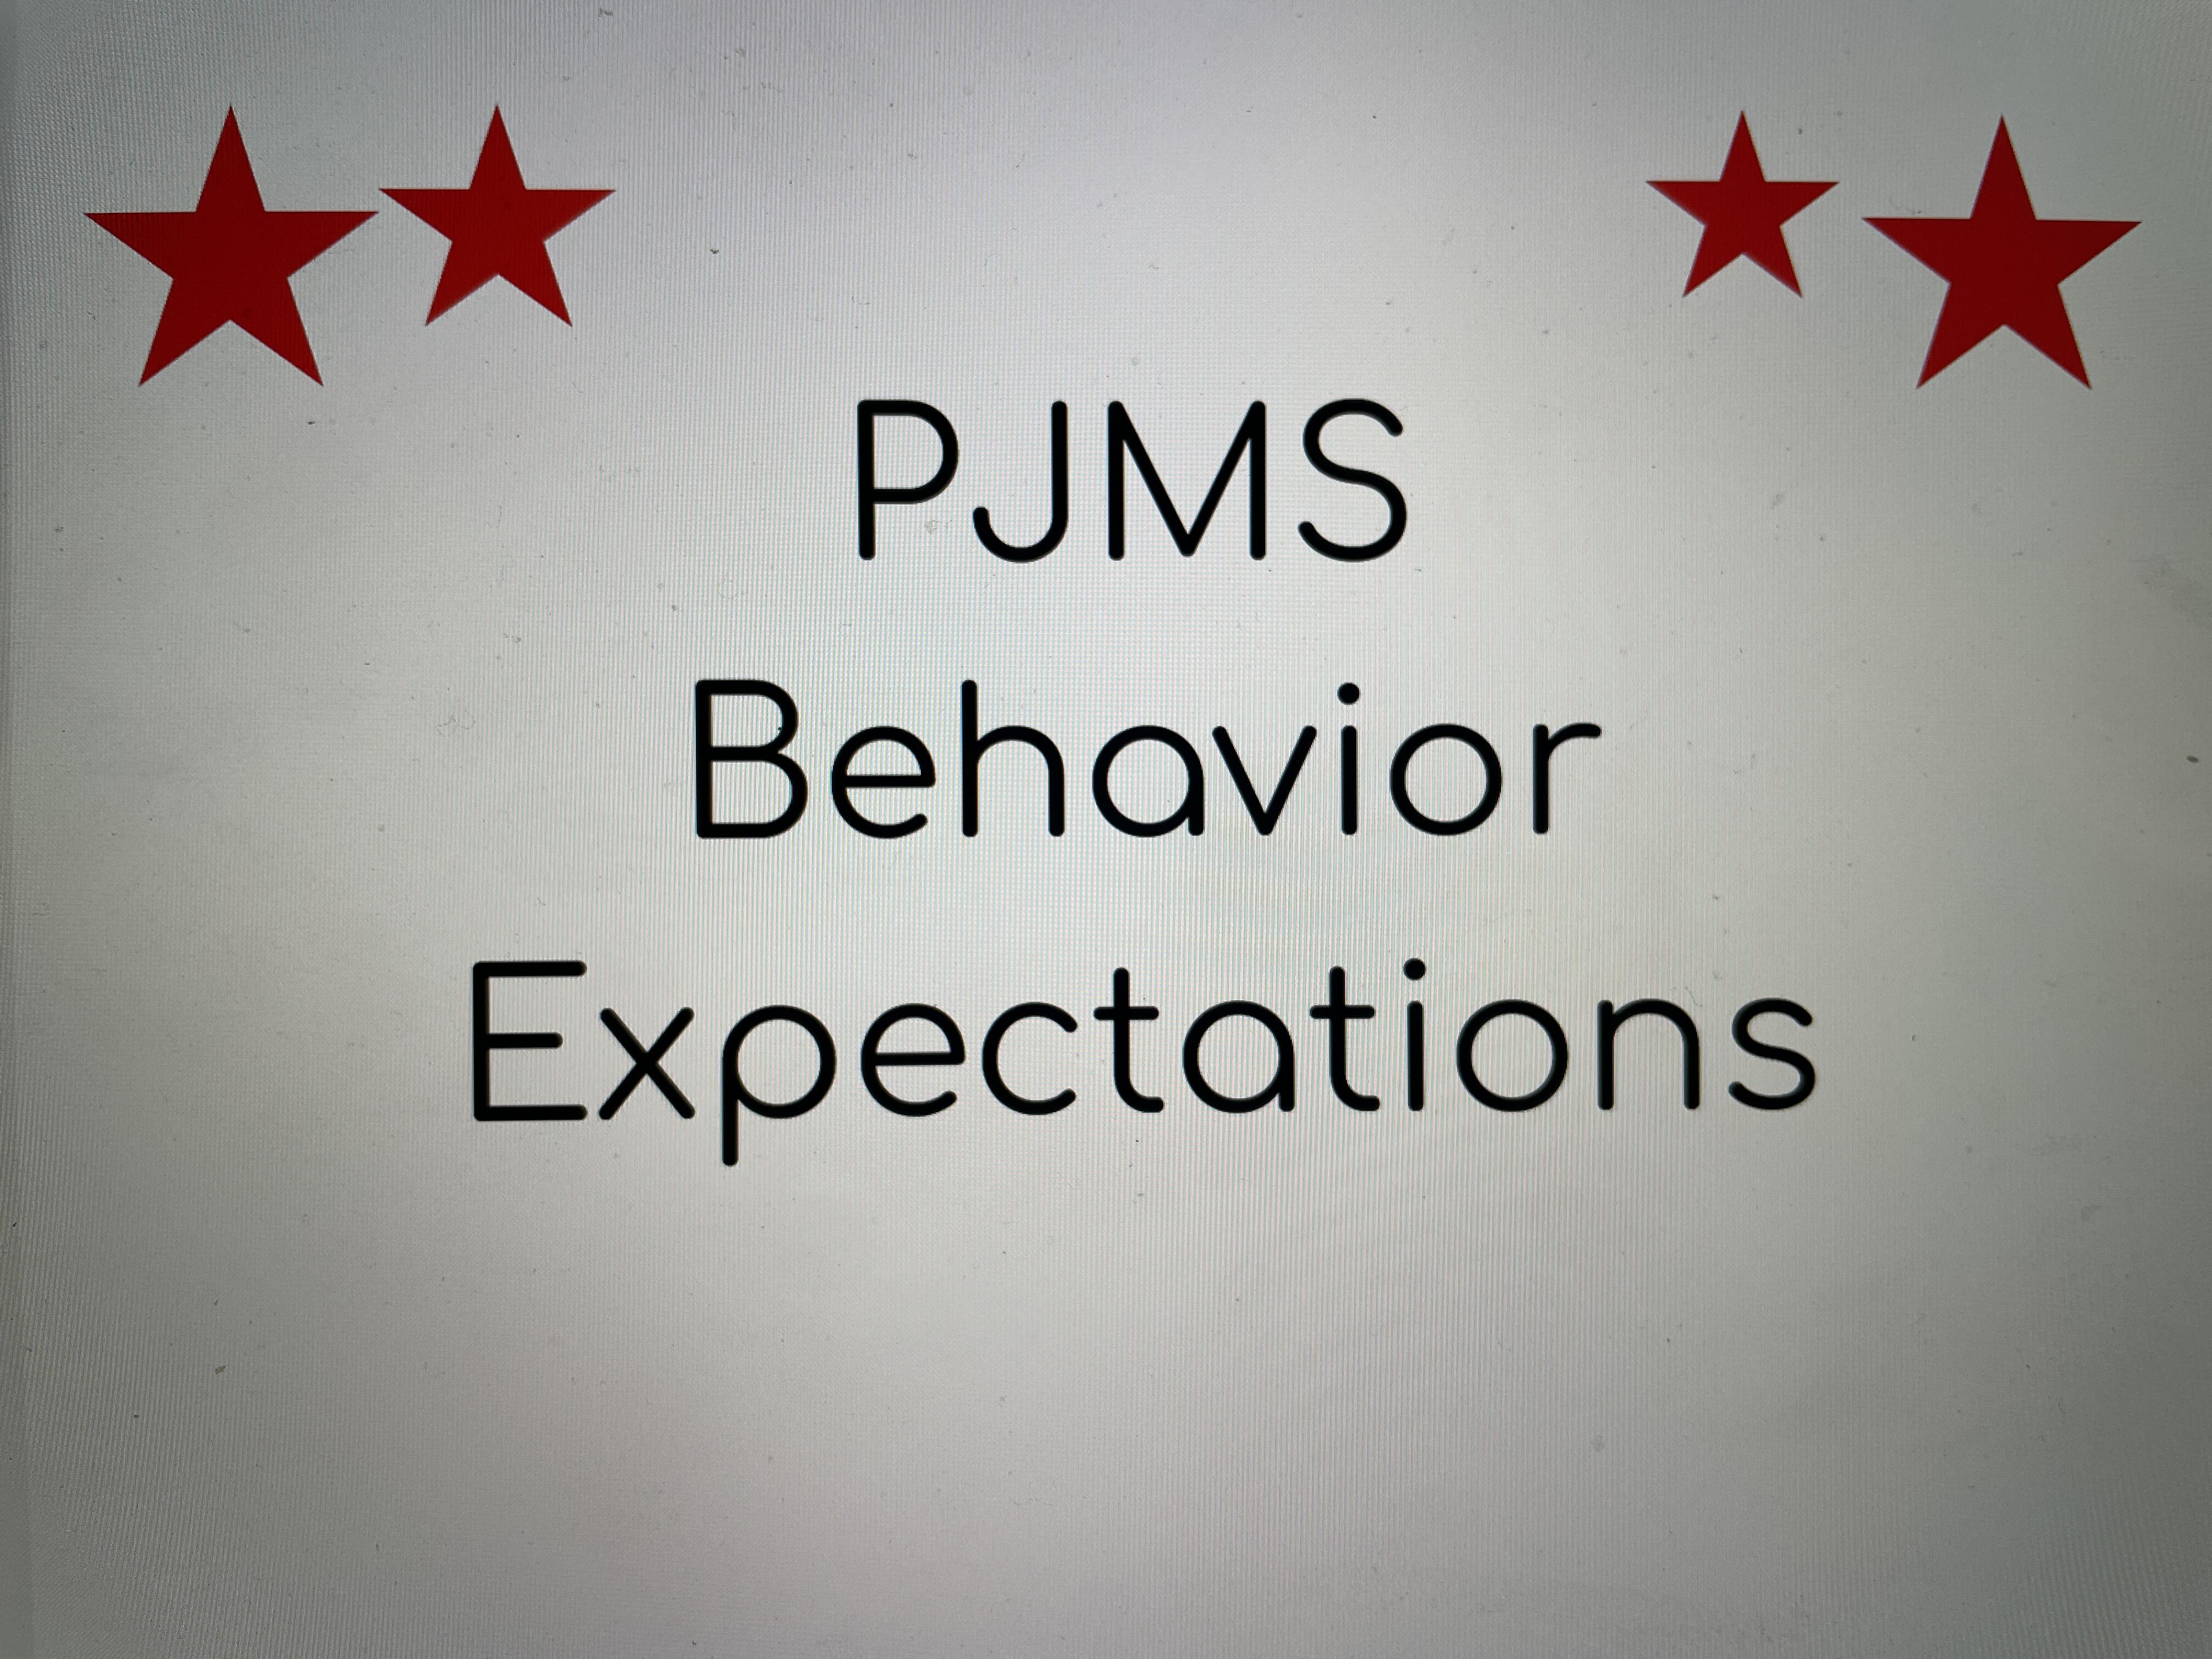 PJMS Behavior Expectations